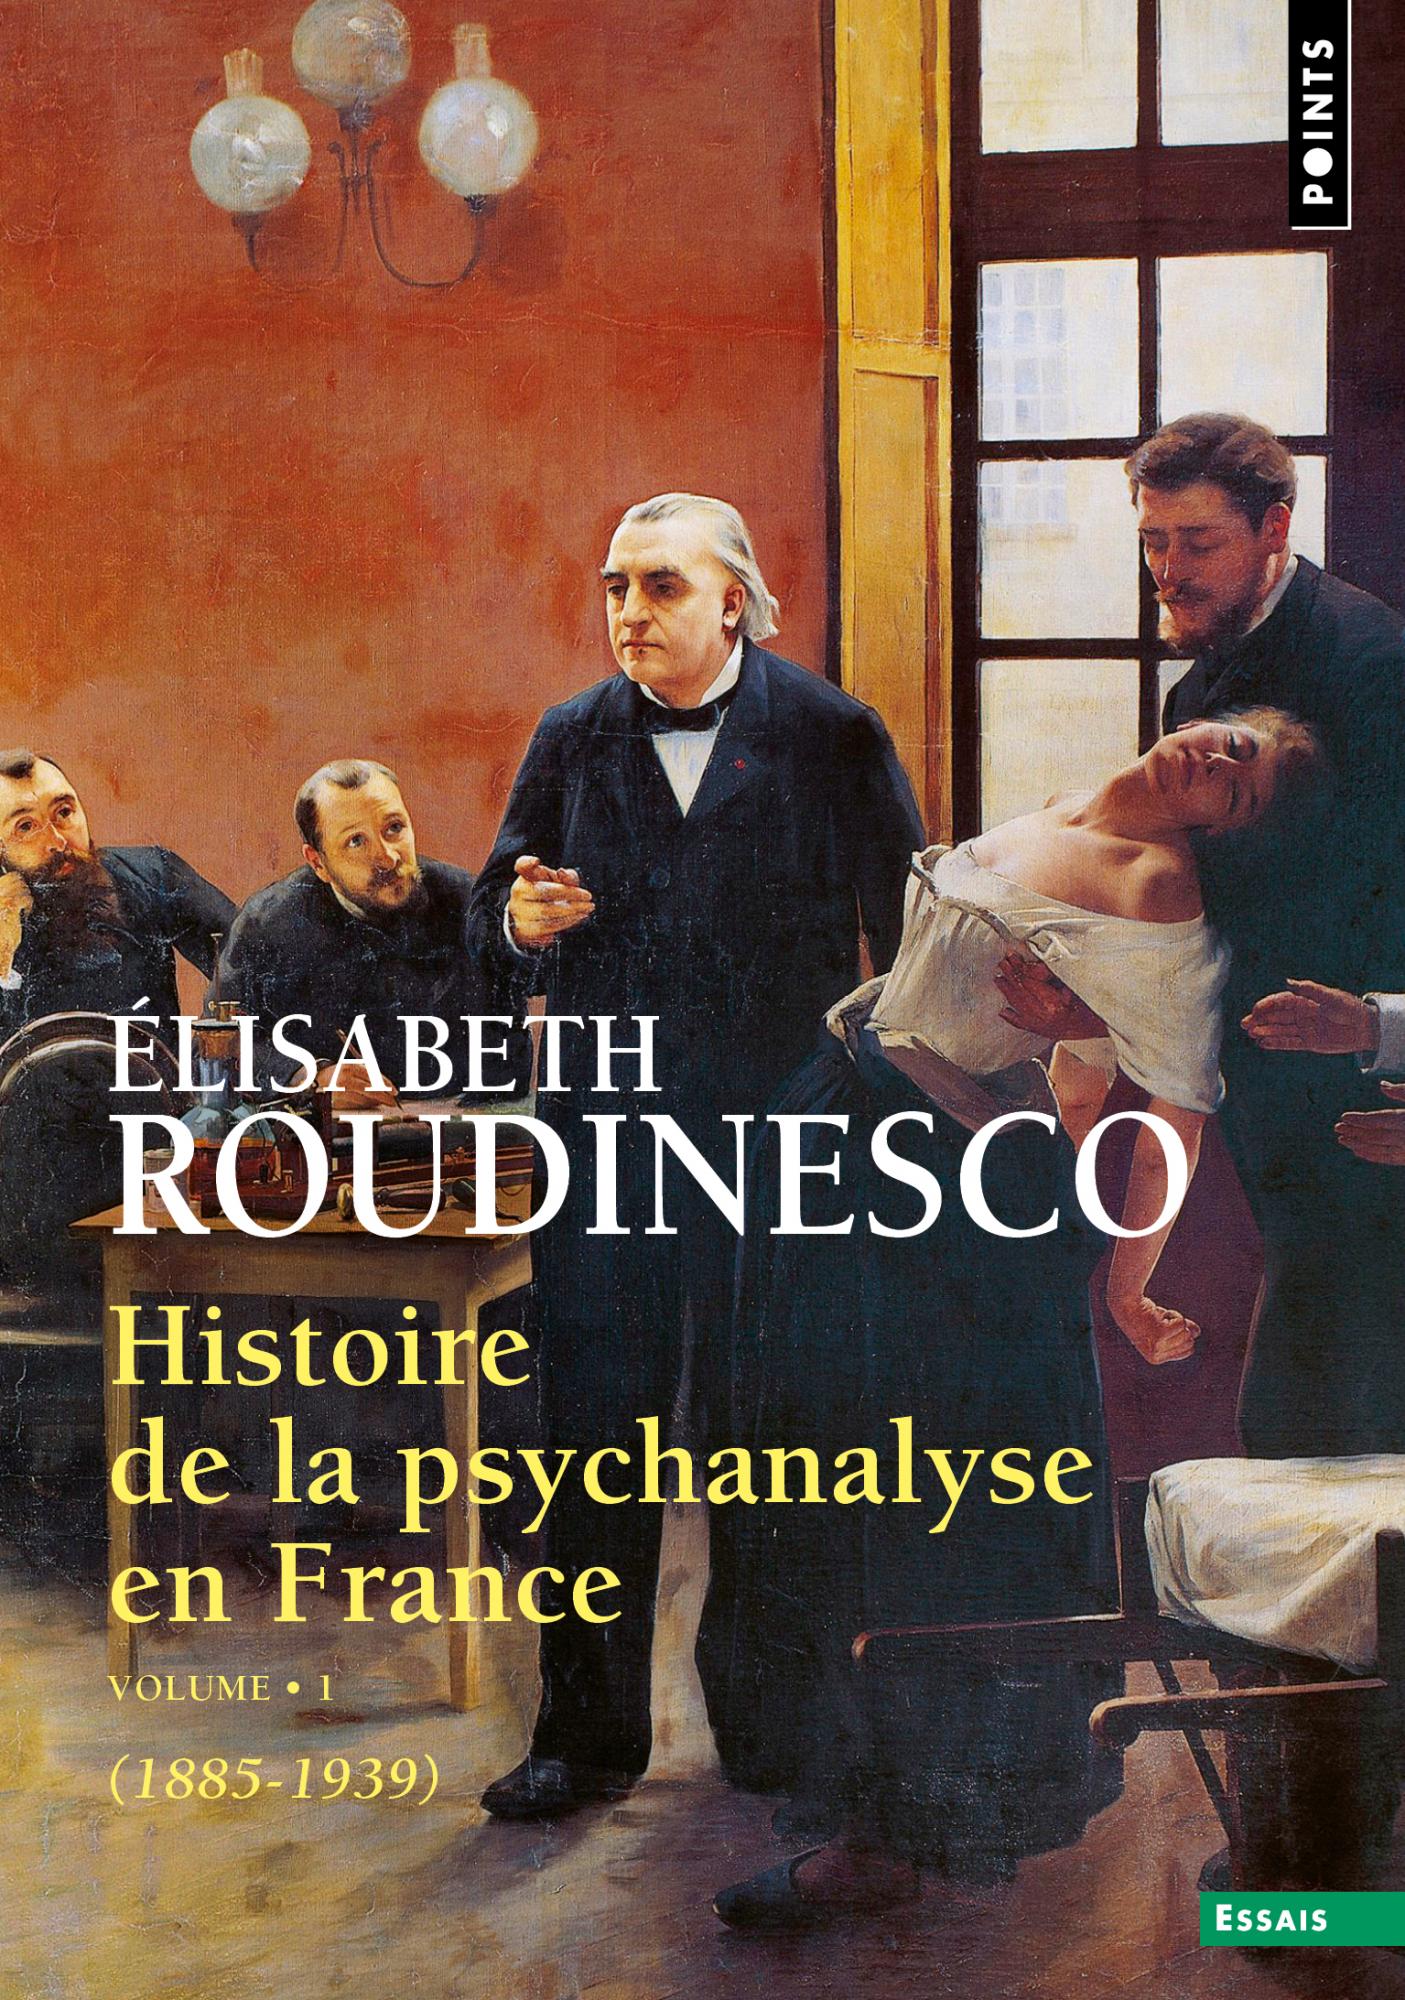 Histoire de la psychanalyse en France 
(1885-1939) - Élisabeth Roudinesco